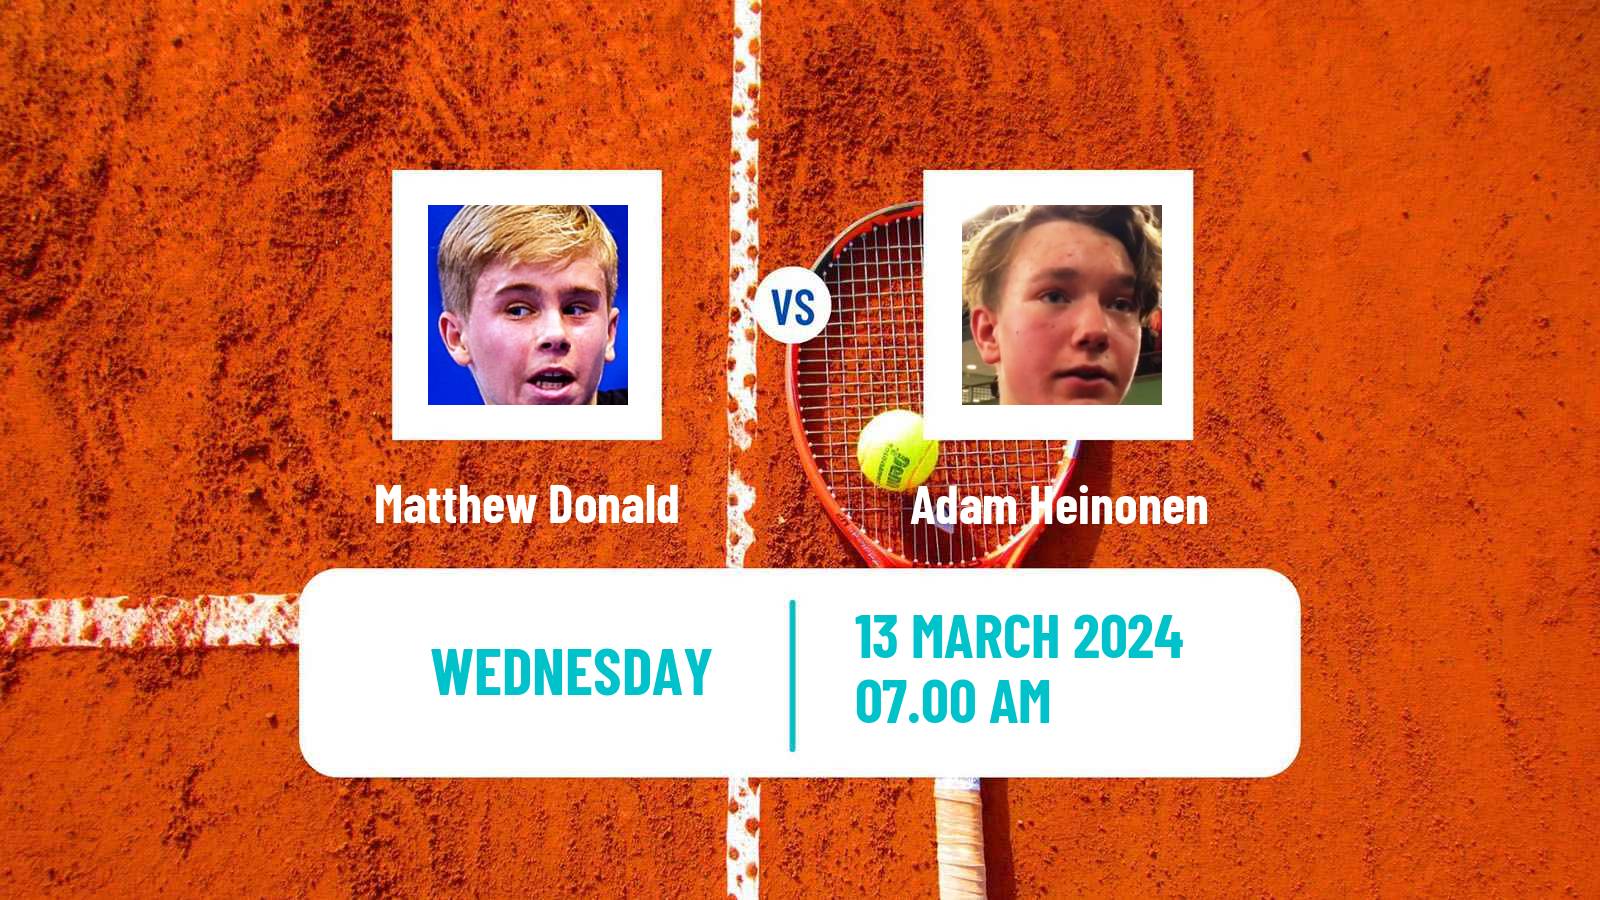 Tennis ITF M15 Heraklion 2 Men Matthew Donald - Adam Heinonen